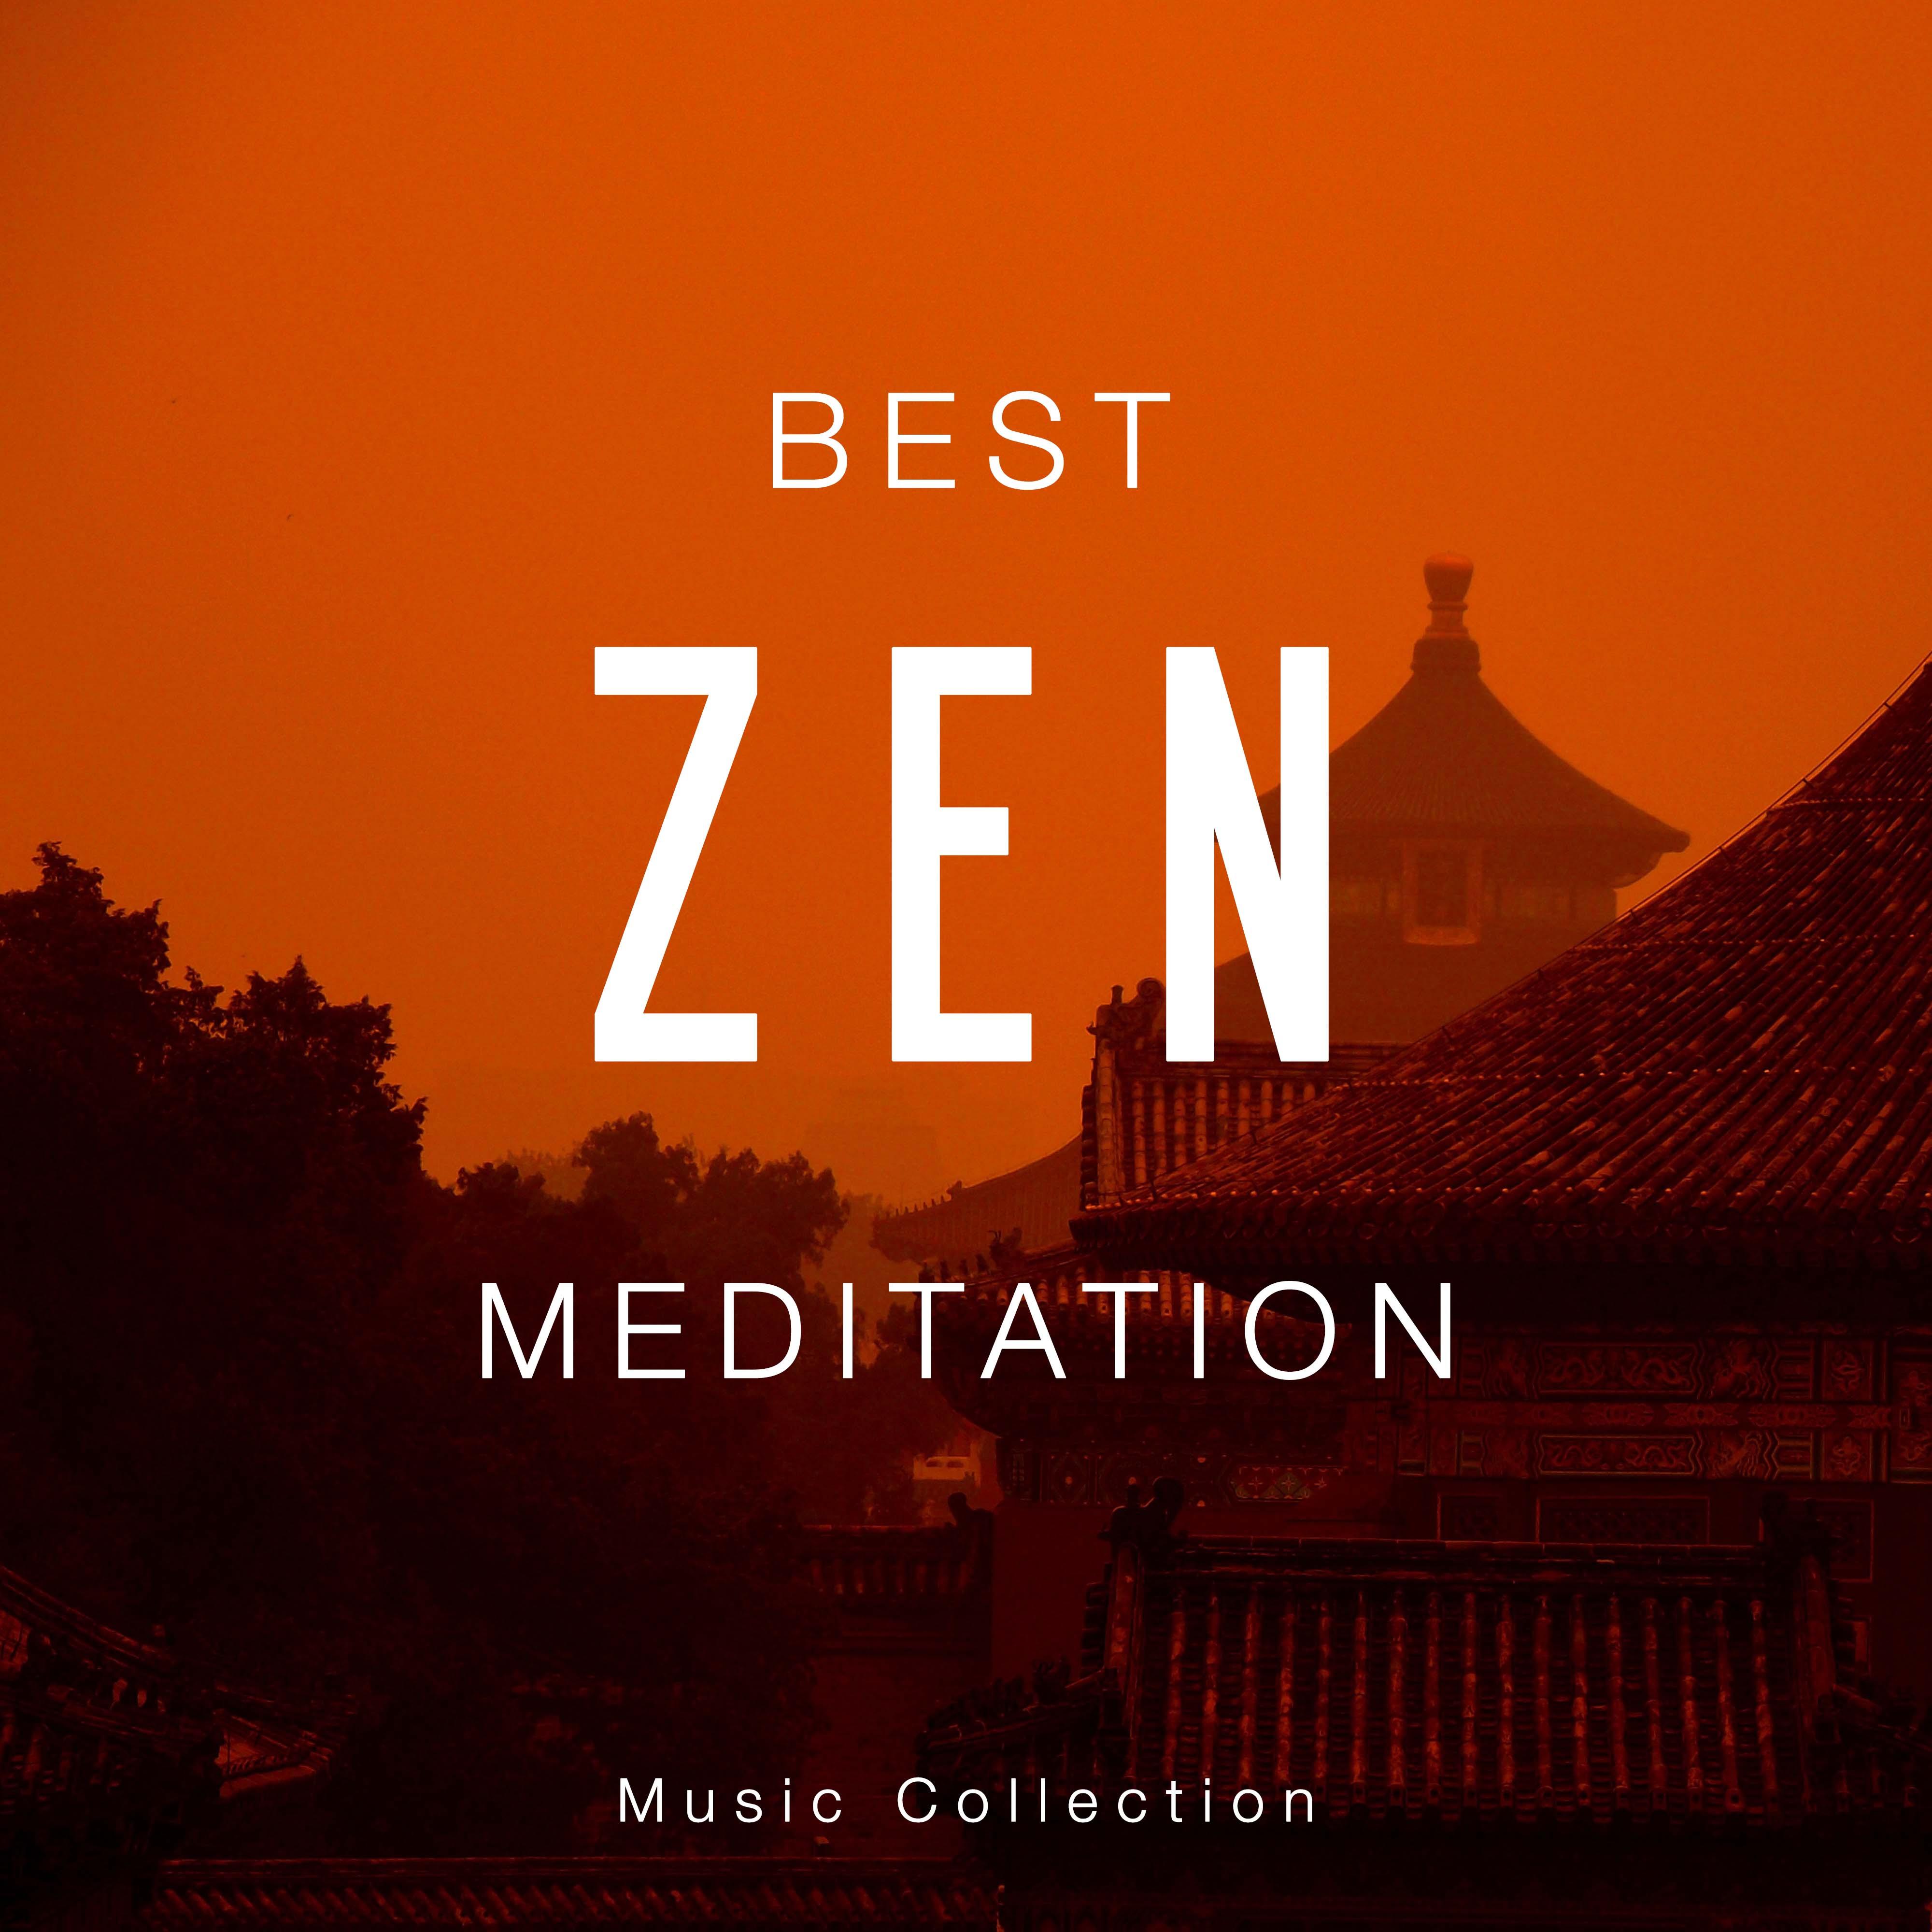 Best Zen Meditation Music Collection